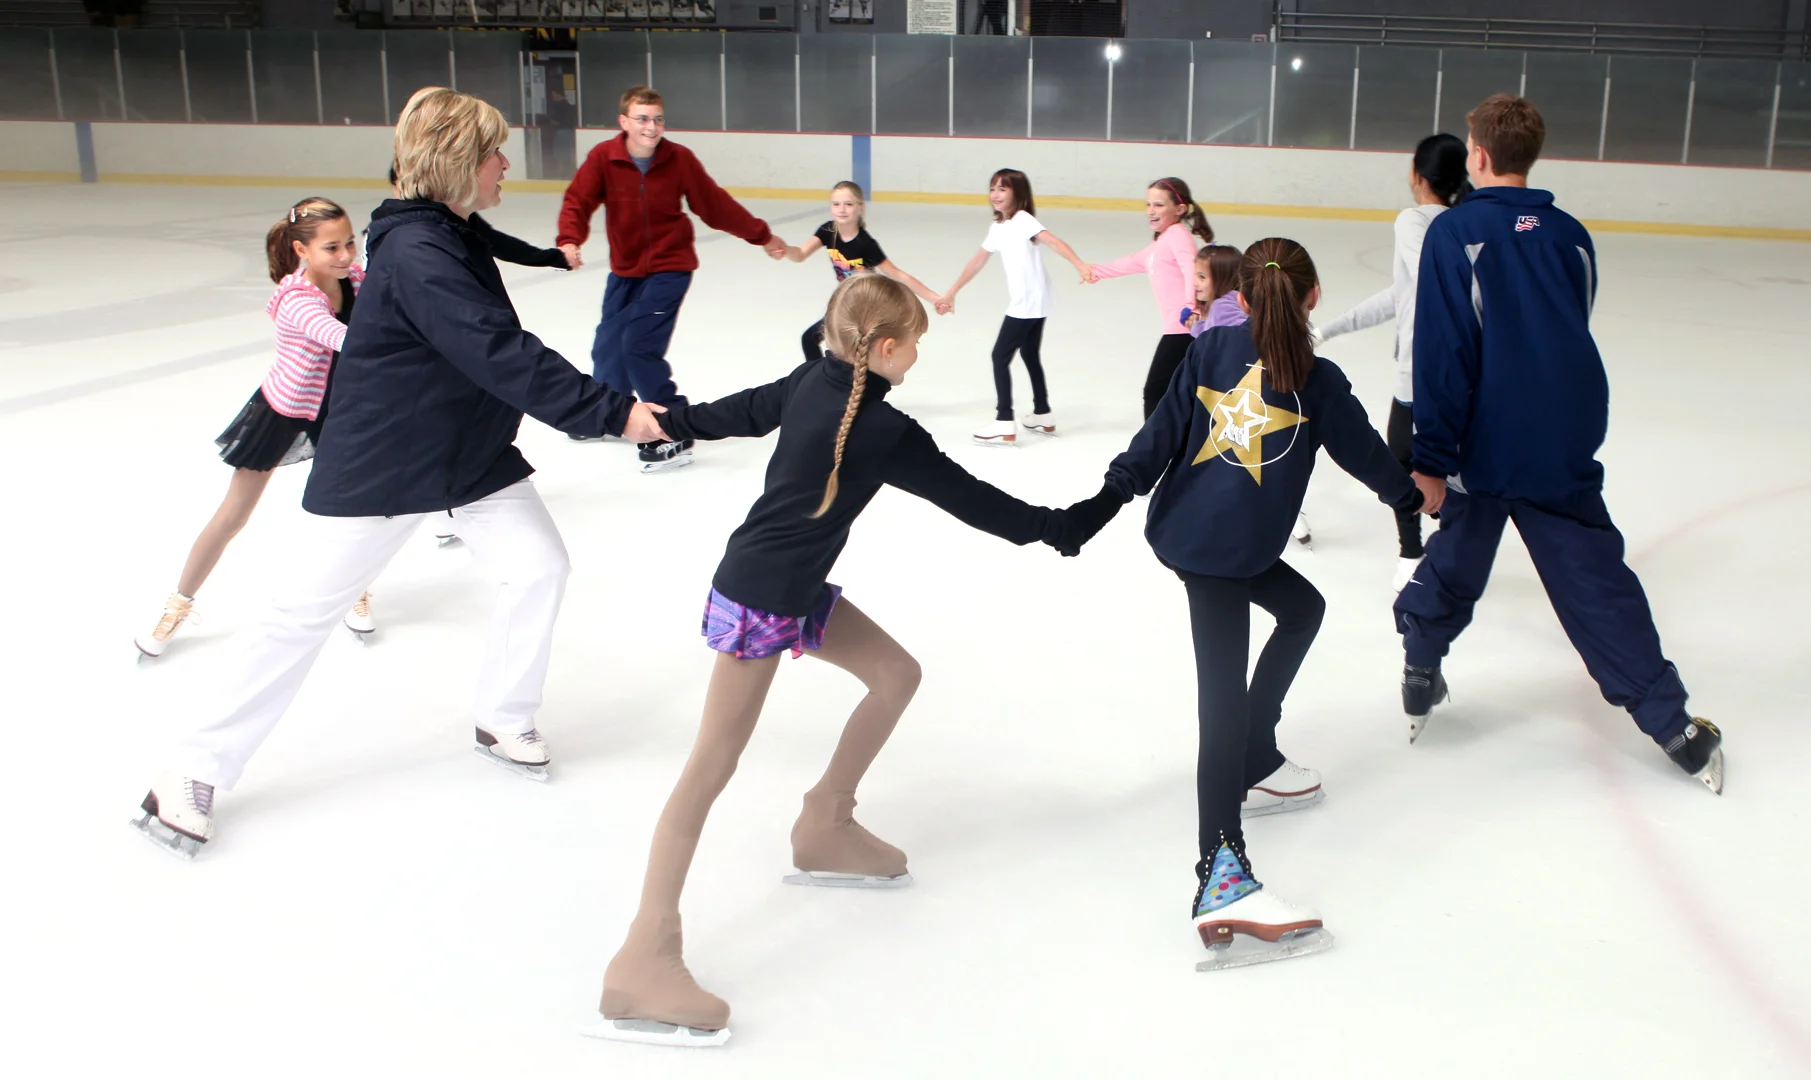 Center Ice of Oaks Figure Skating Club